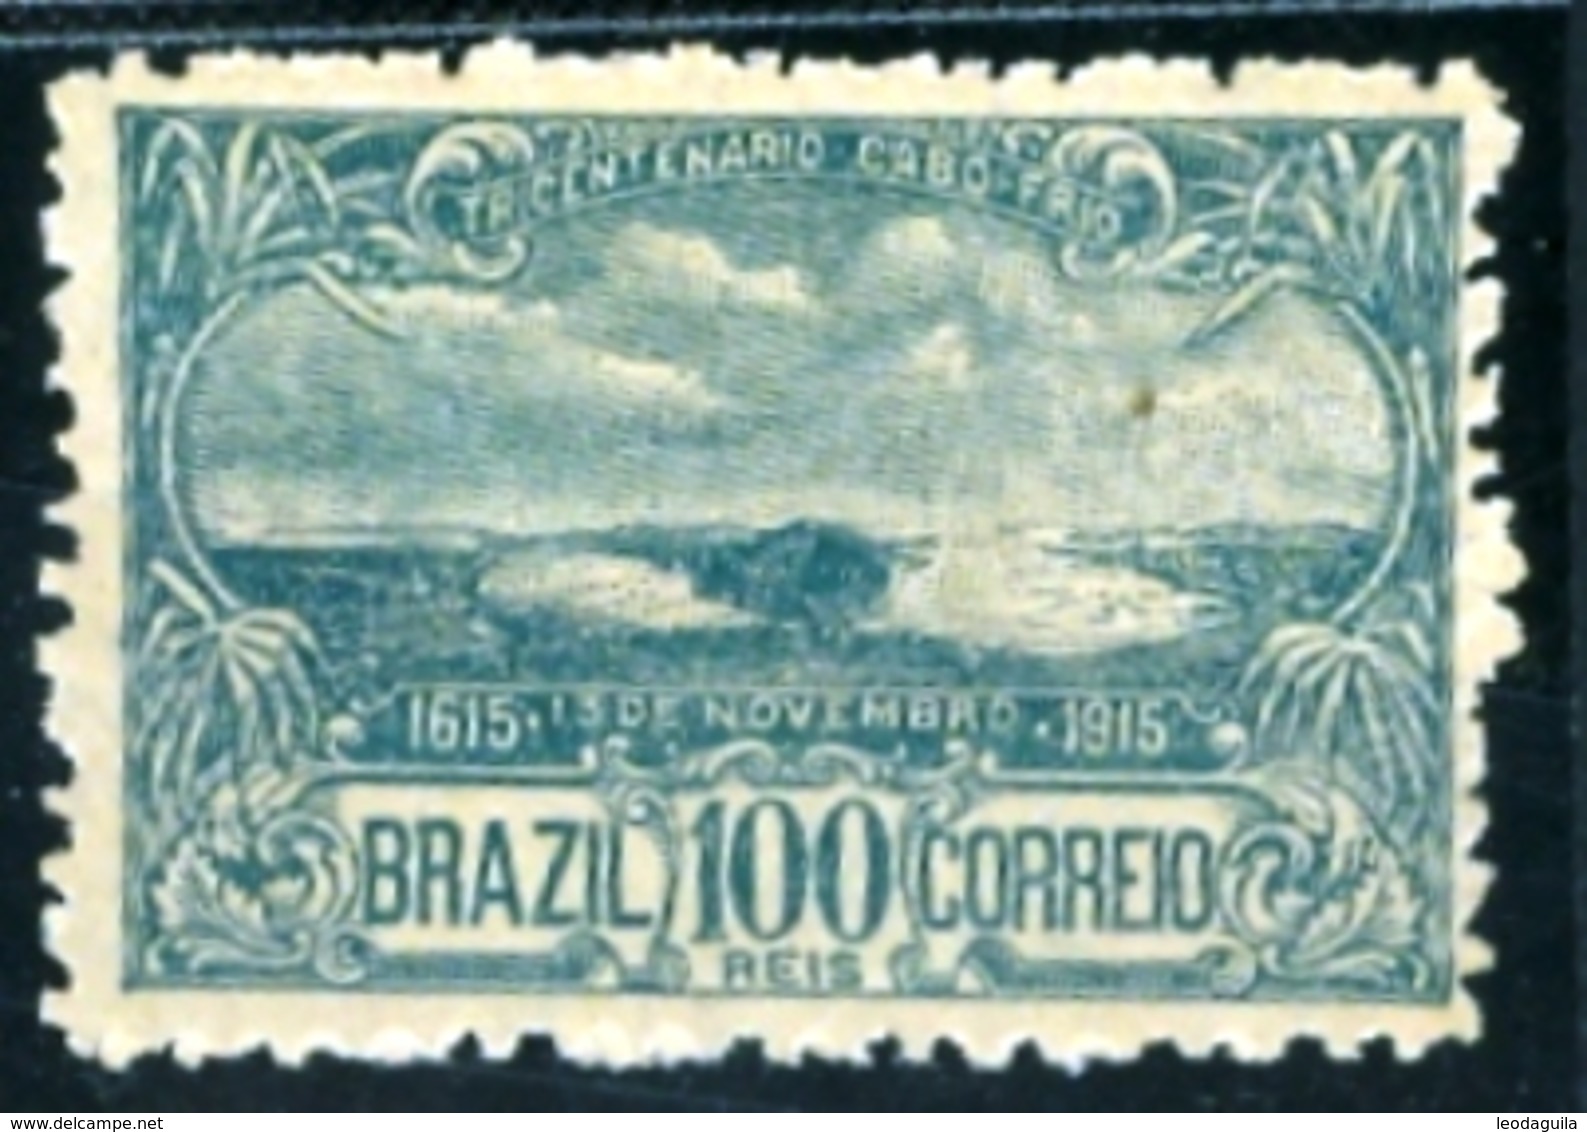 BRAZIL # 165  - FOUNDATION  CITY OF CABO FRIO - 3rd  CENTENARY  -  MINT / OG  - 1915 - Ungebraucht